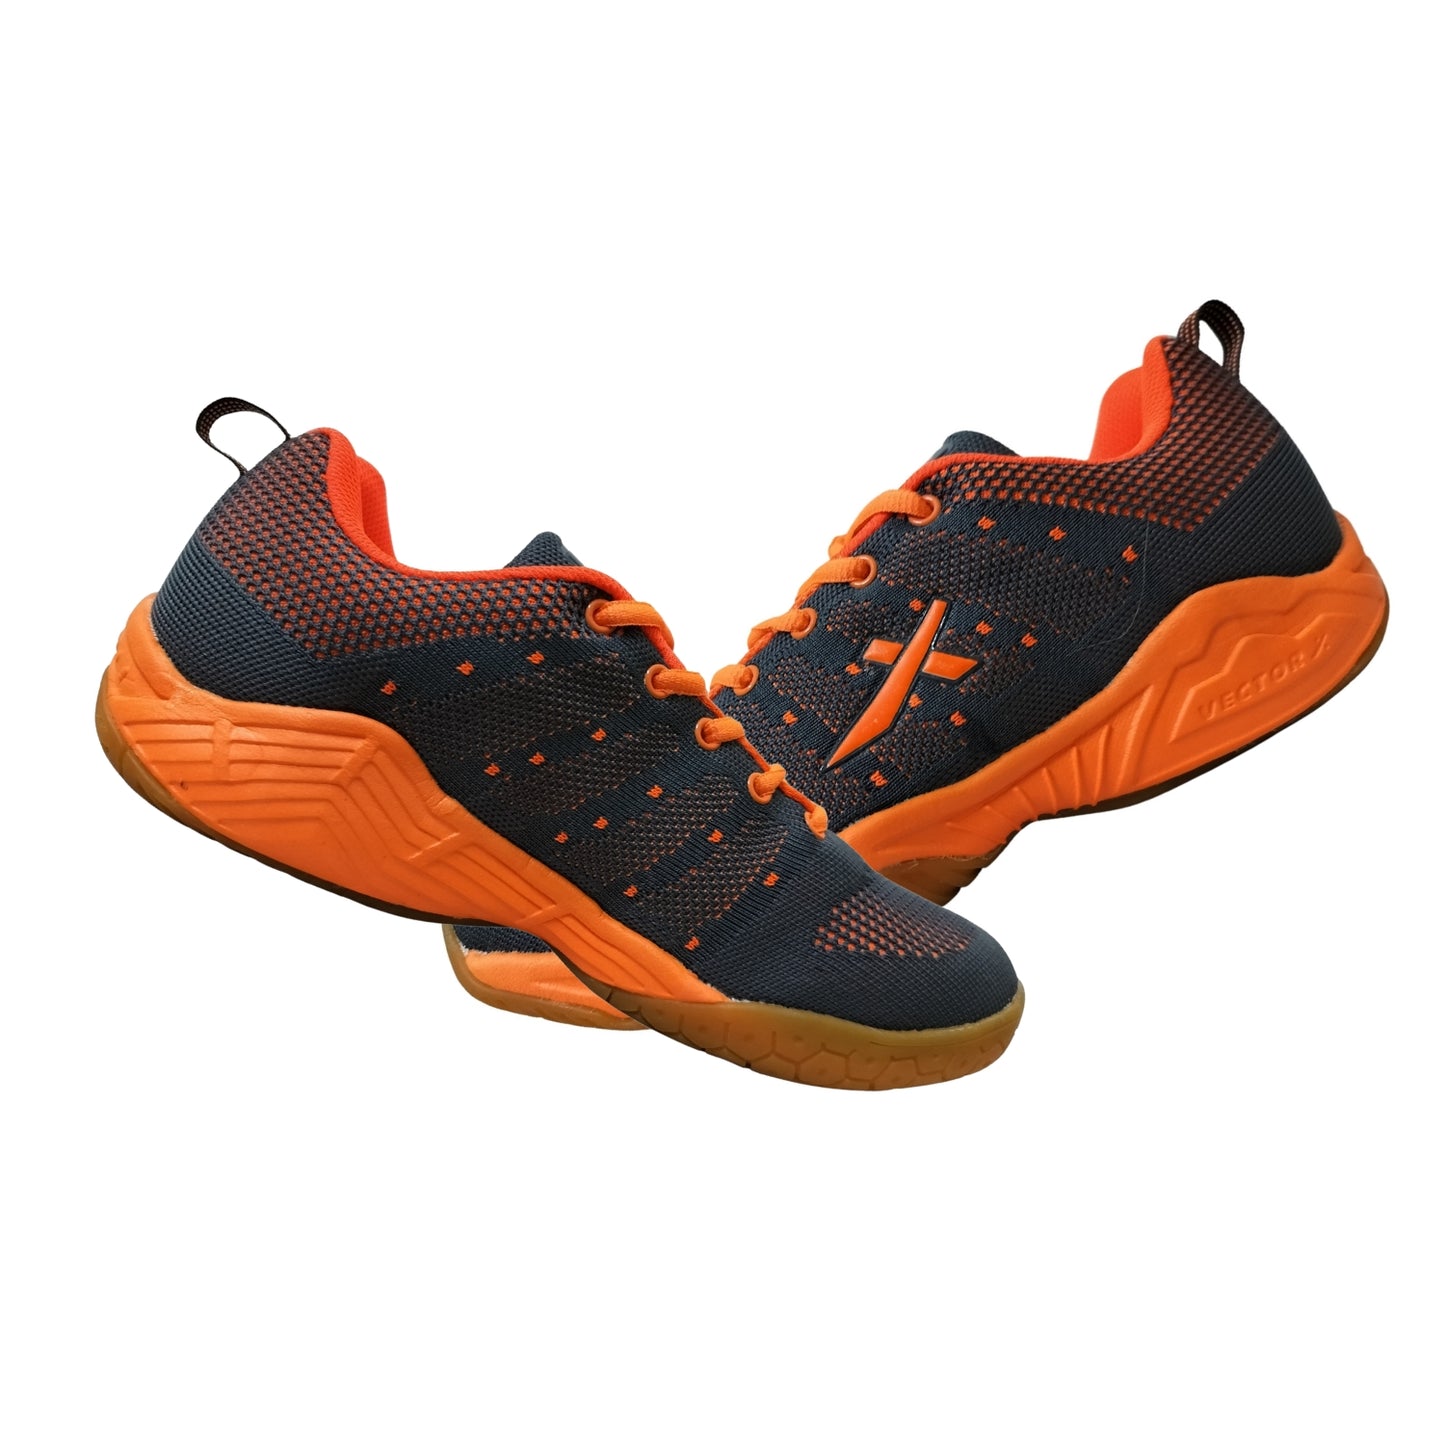 Vector X Men's Mesh Badminton Court Shoes - Best Price online Prokicksports.com